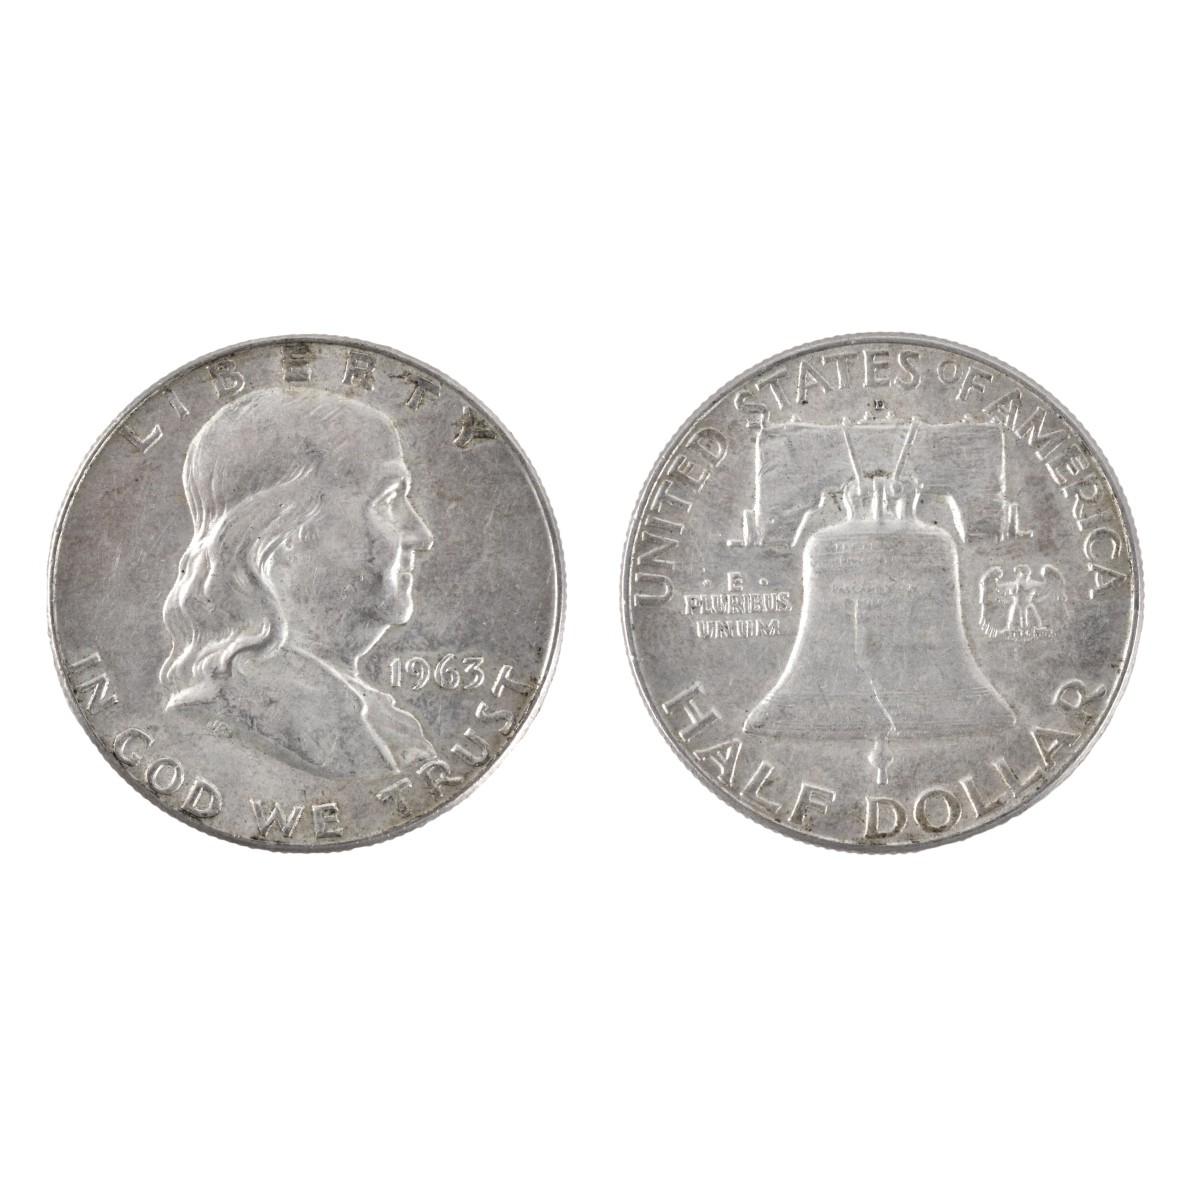 21 US Franklin Half Dollar Coins